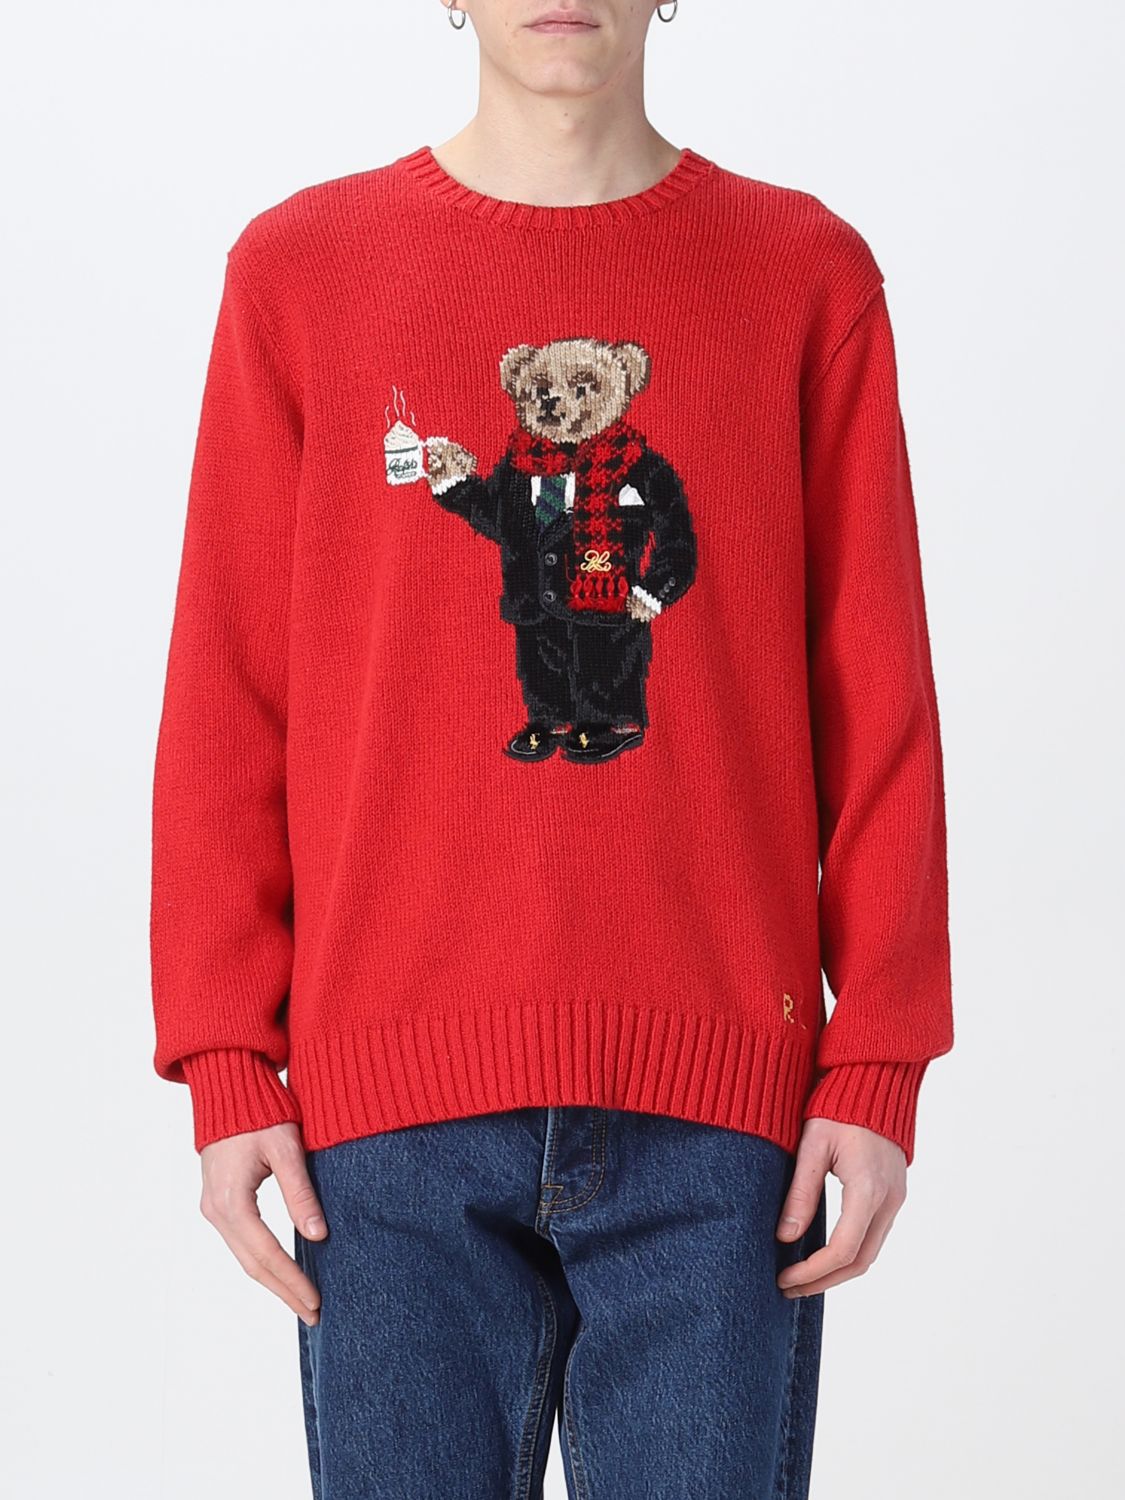 POLO RALPH LAUREN: sweater for man - Red | Polo Ralph Lauren sweater  710892468 online on 